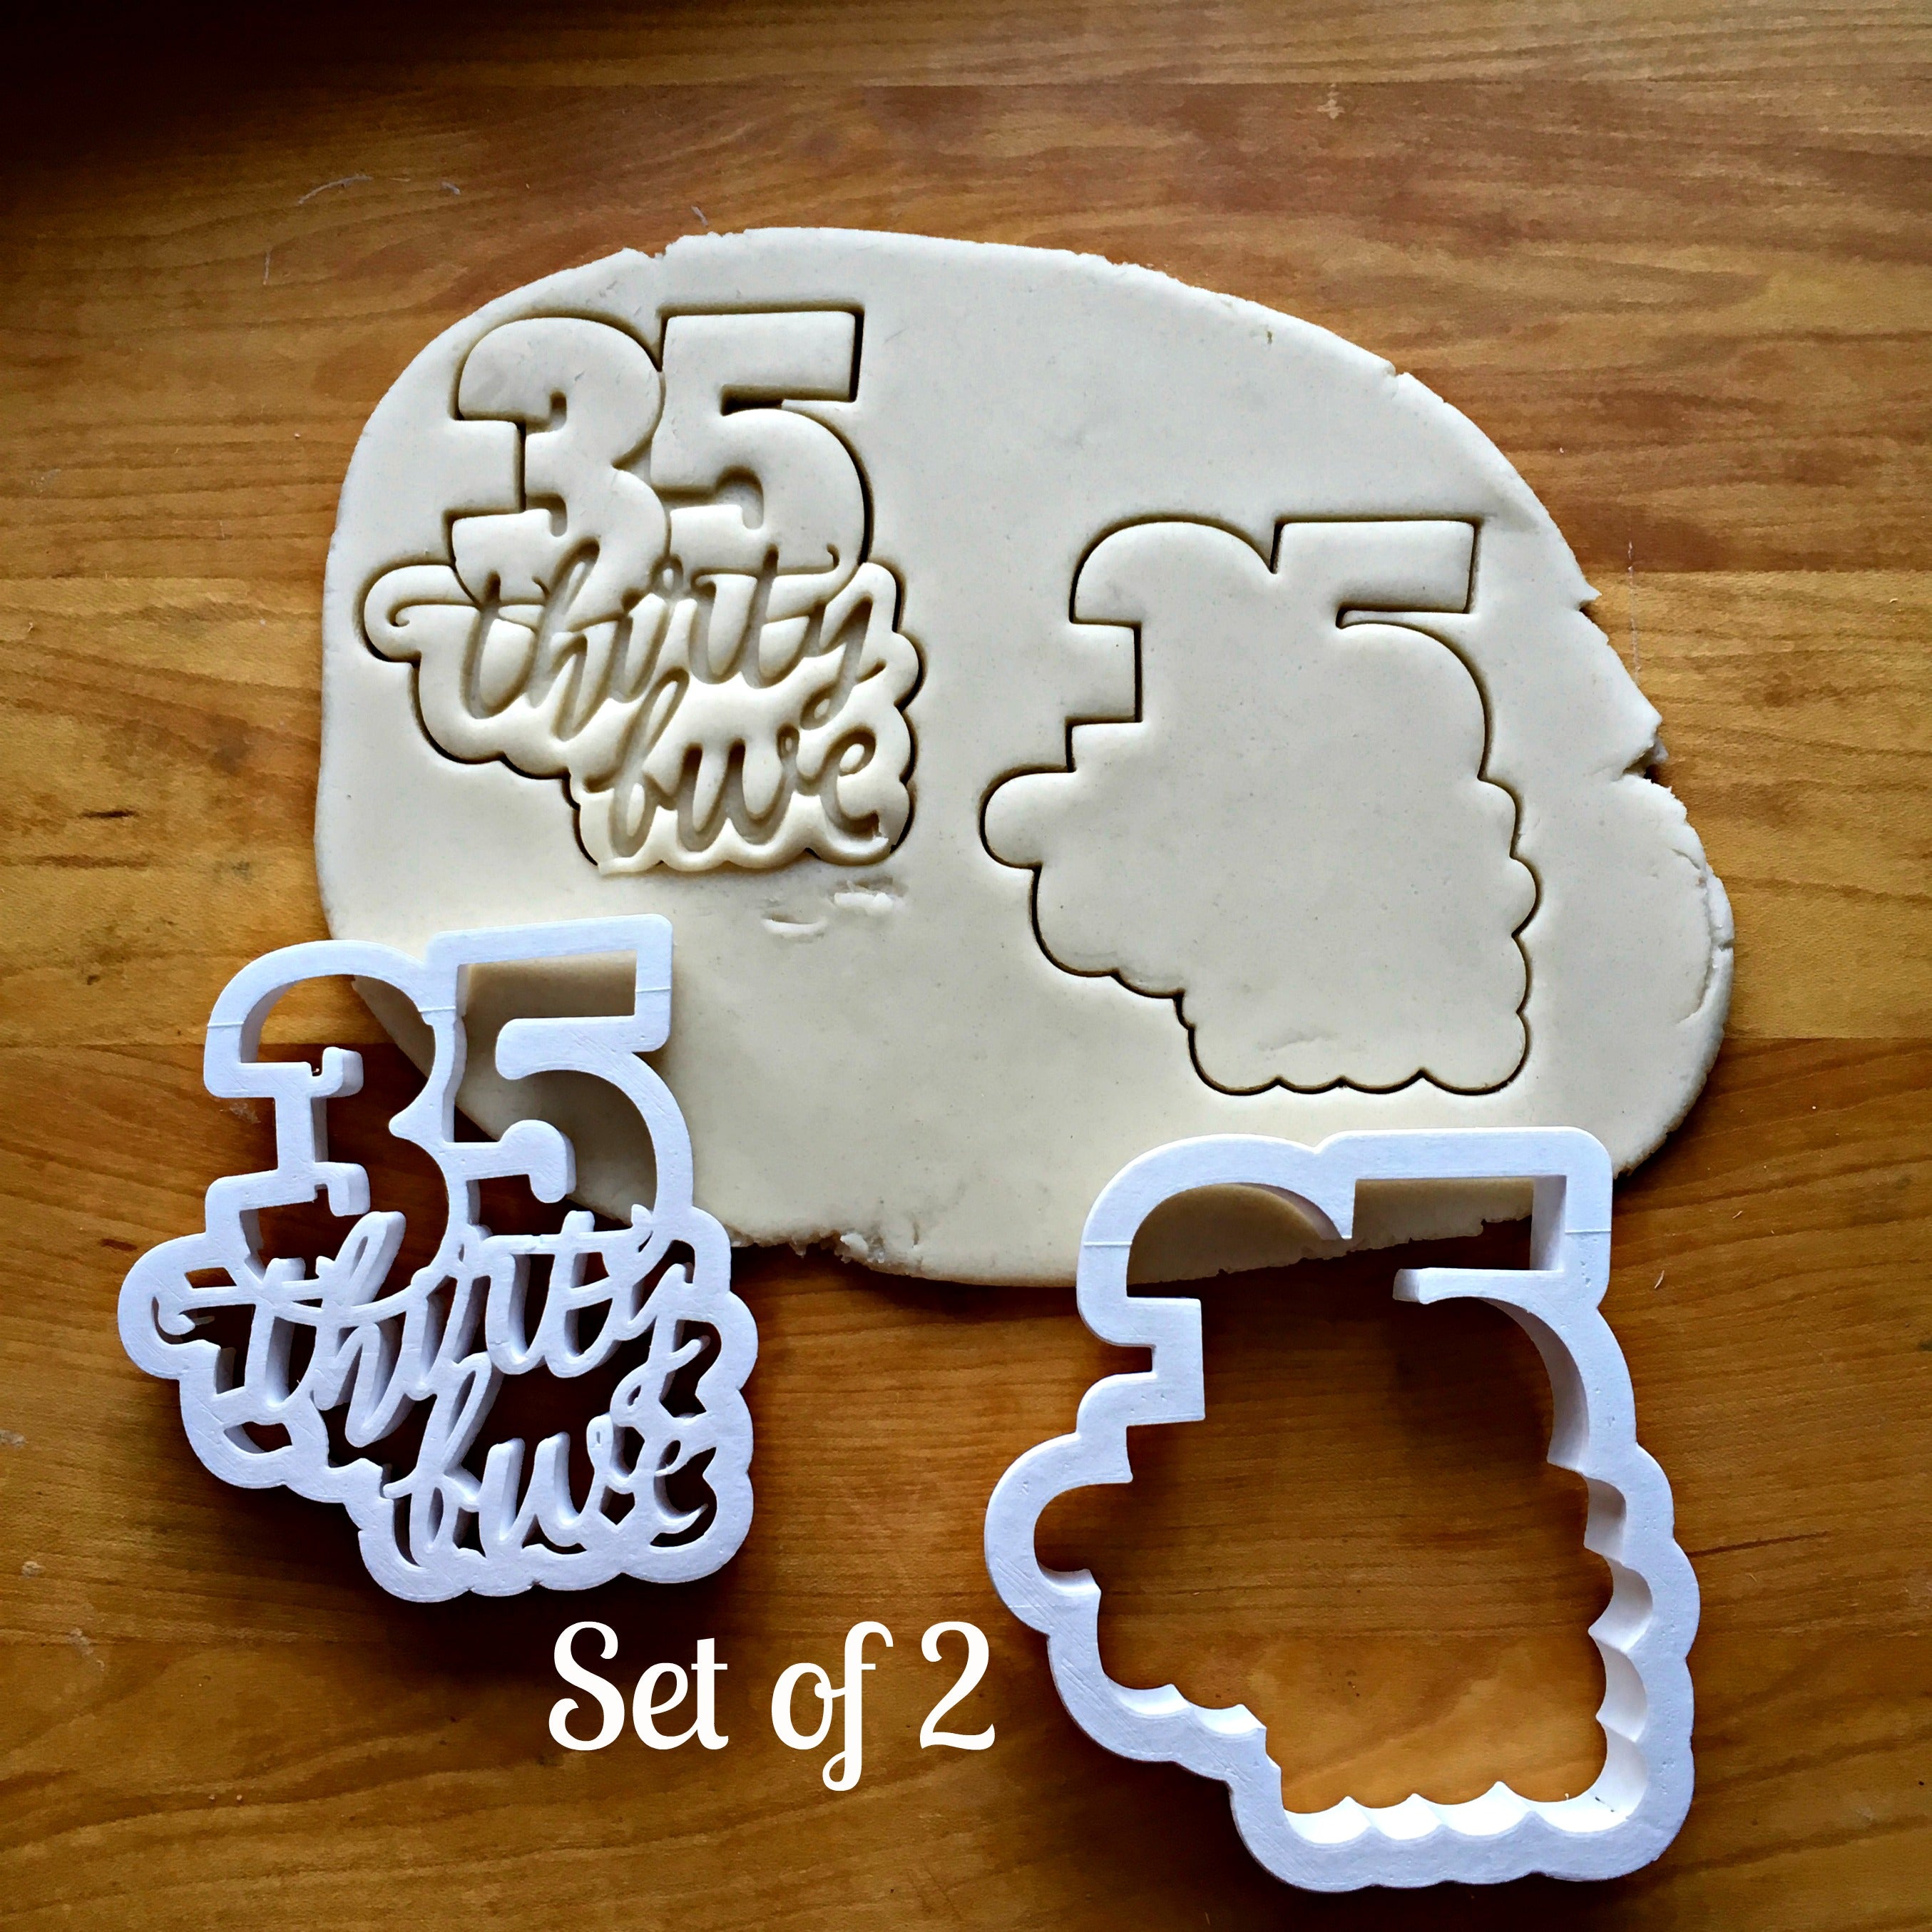 Set of 2 Lettered Number 35 Cookie Cutters/Dishwasher Safe